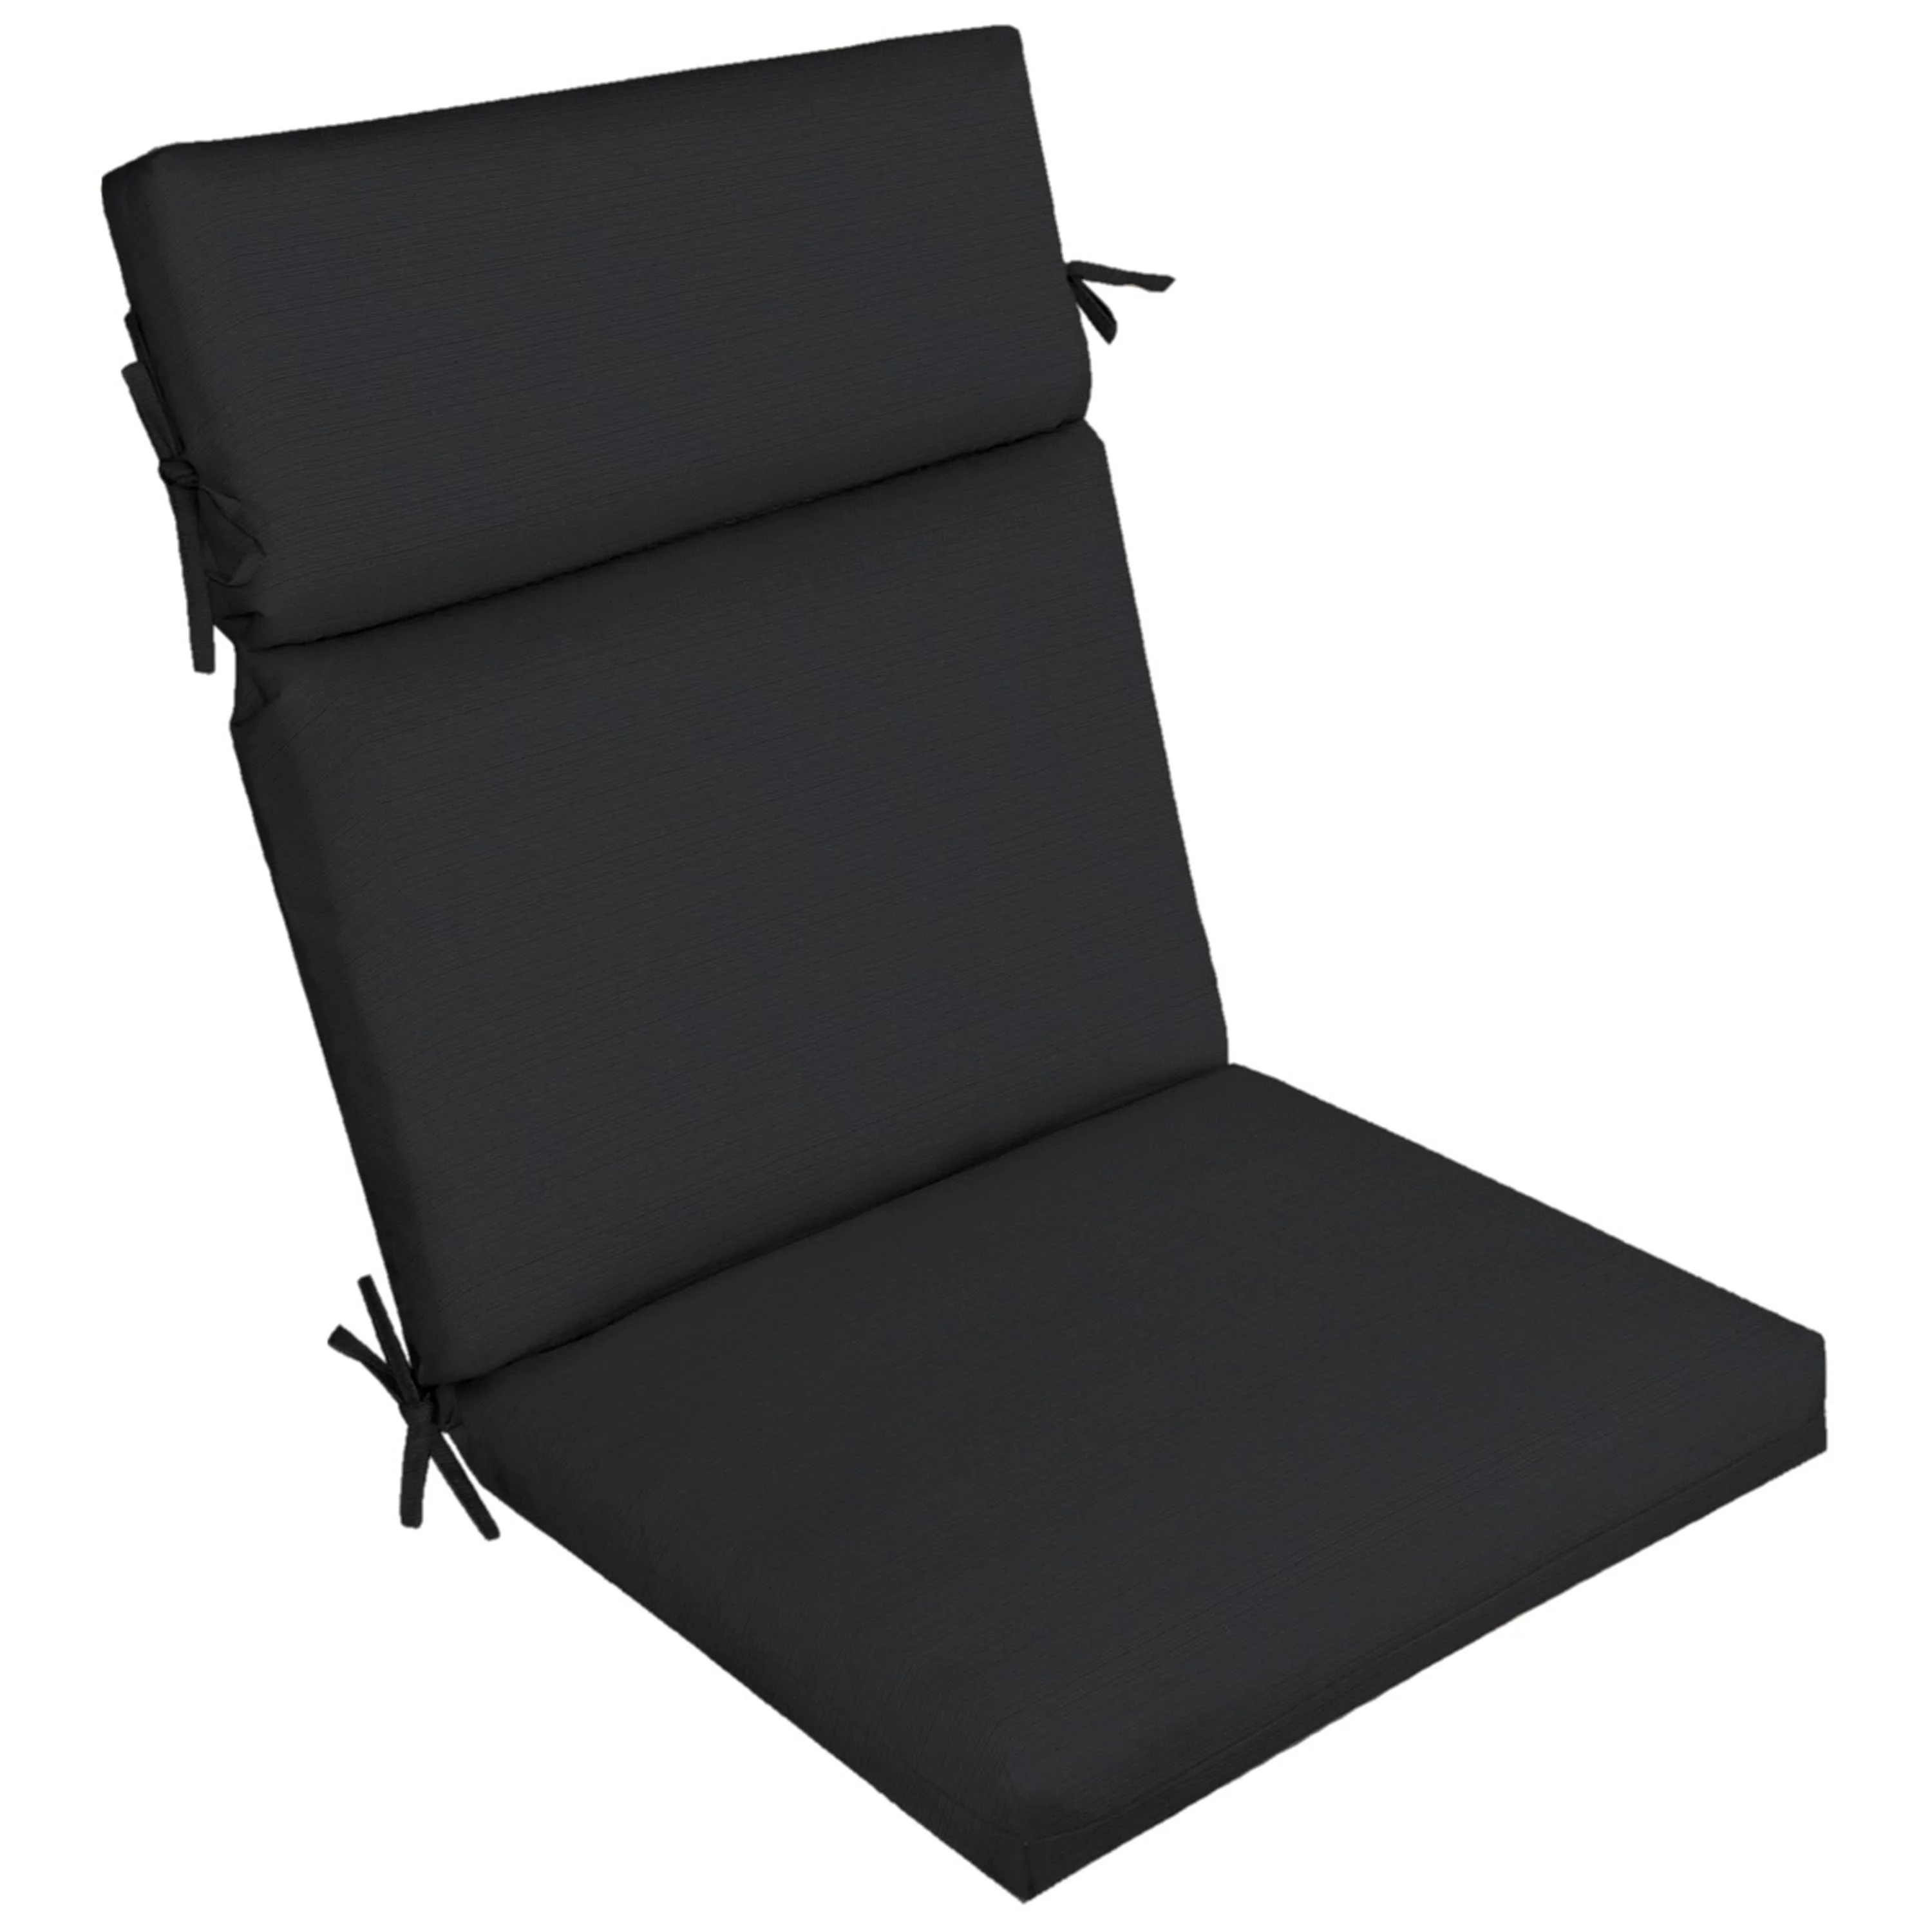 Better Homes & Gardens 44" x 21" Black Rectangle Outdoor Chair Cushion, 1 Piece